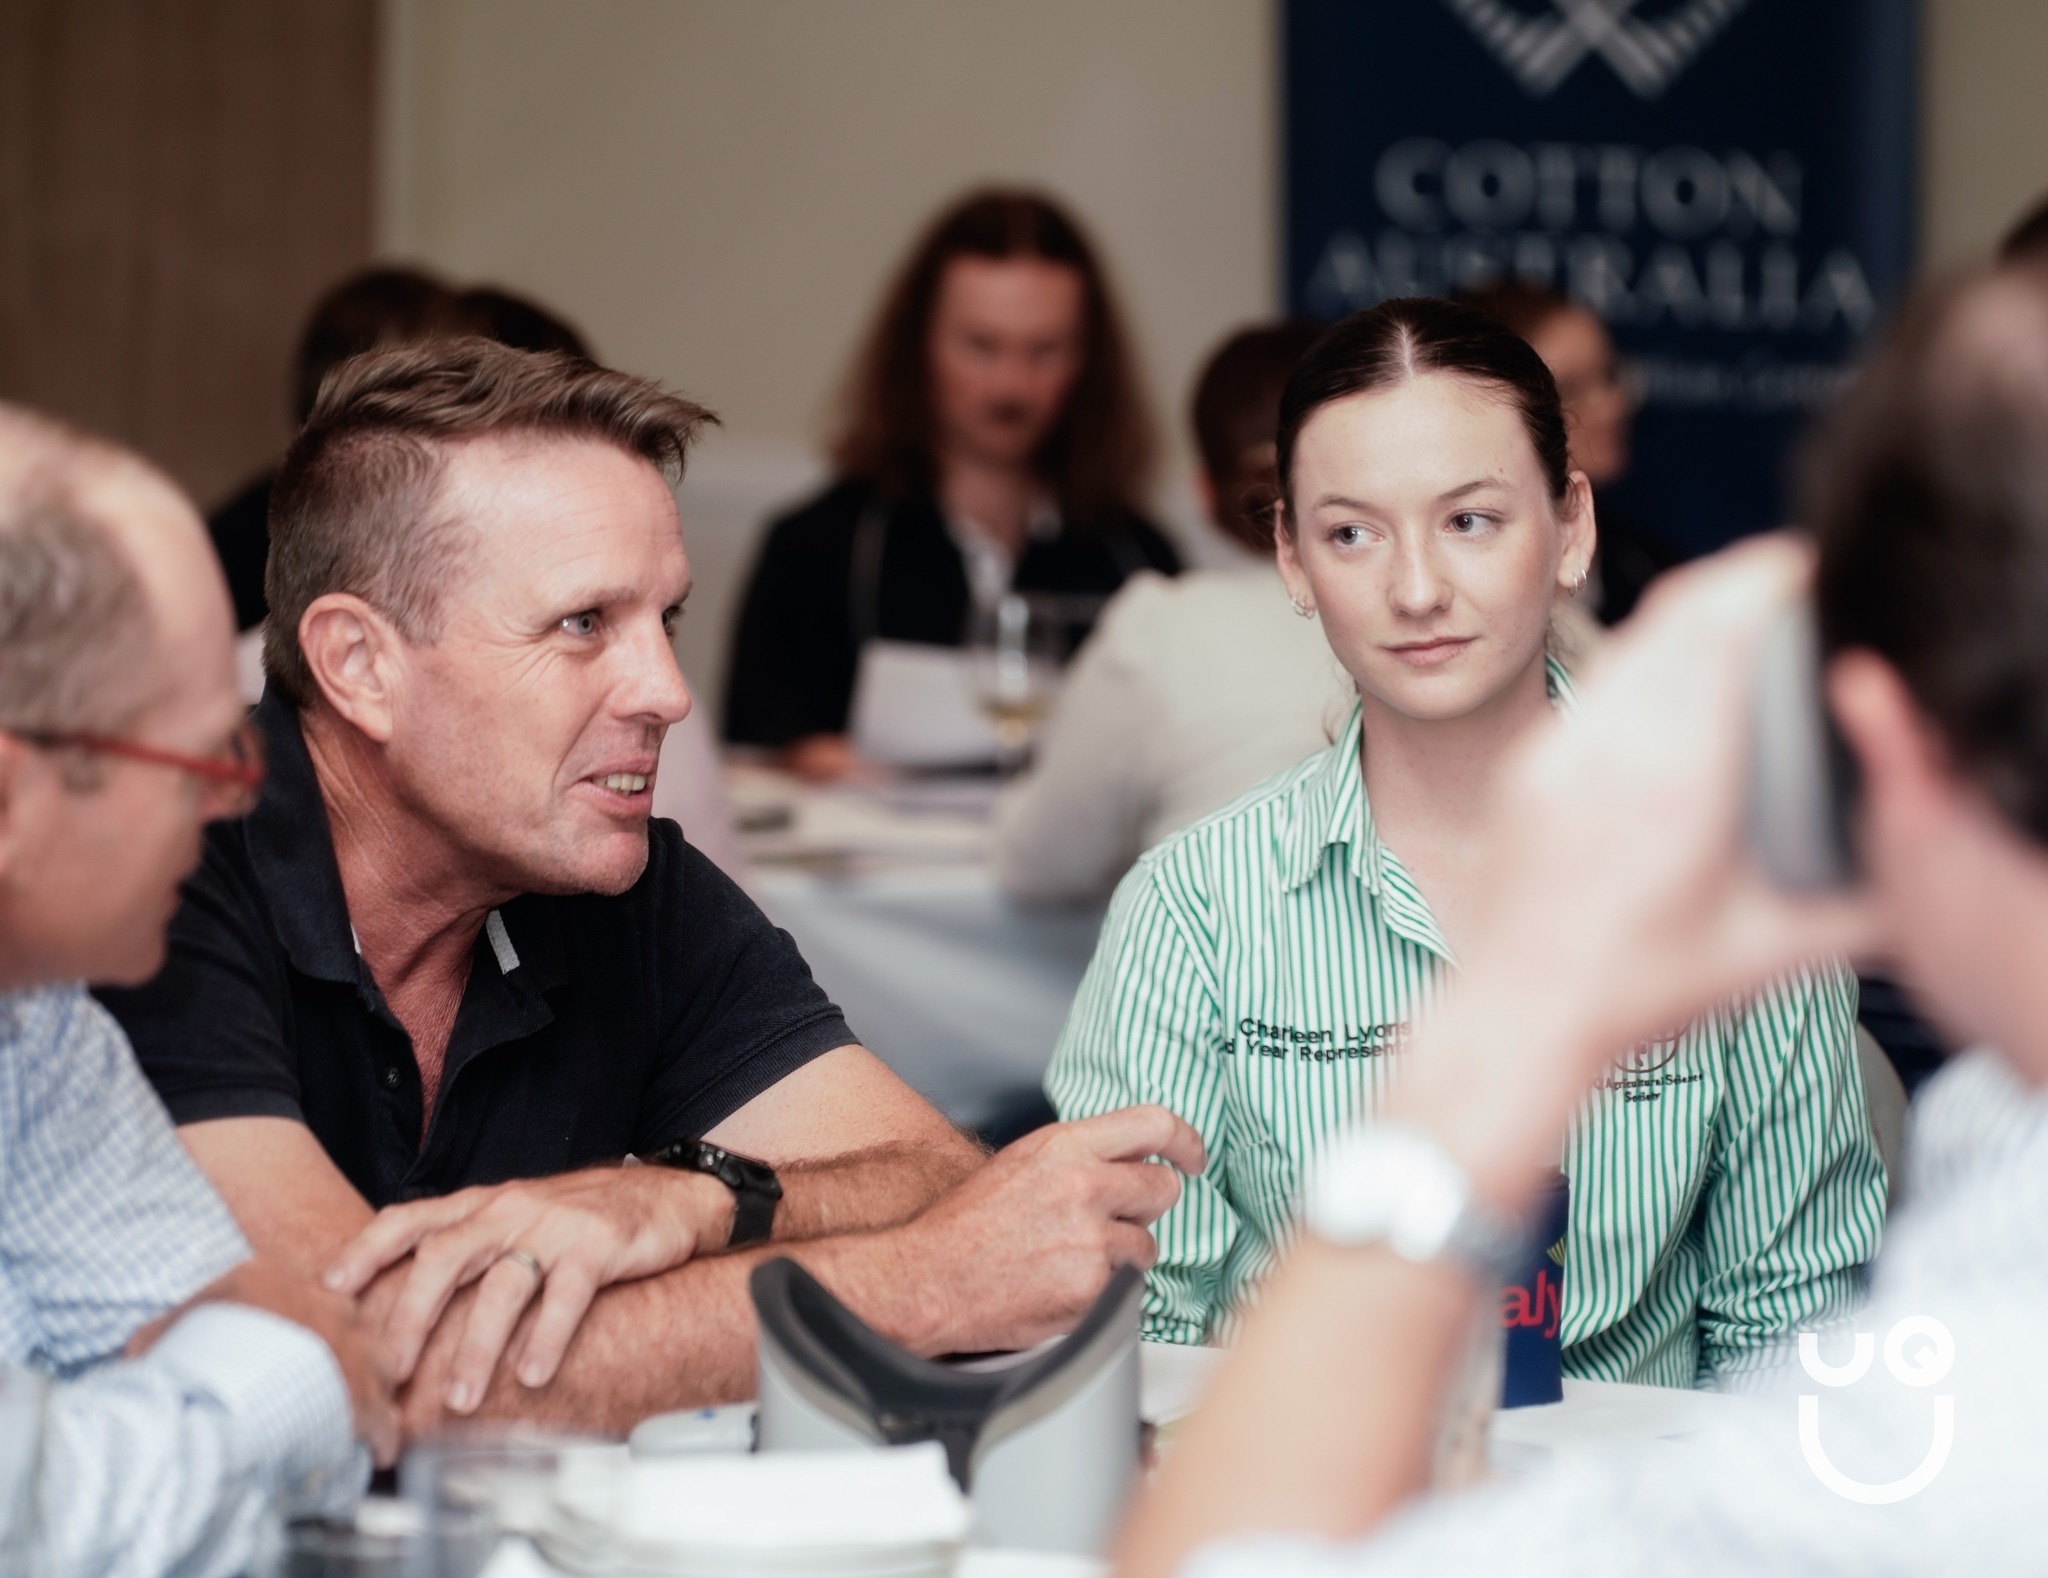 Cotton Australia's Paul Sloman shared career tips with students